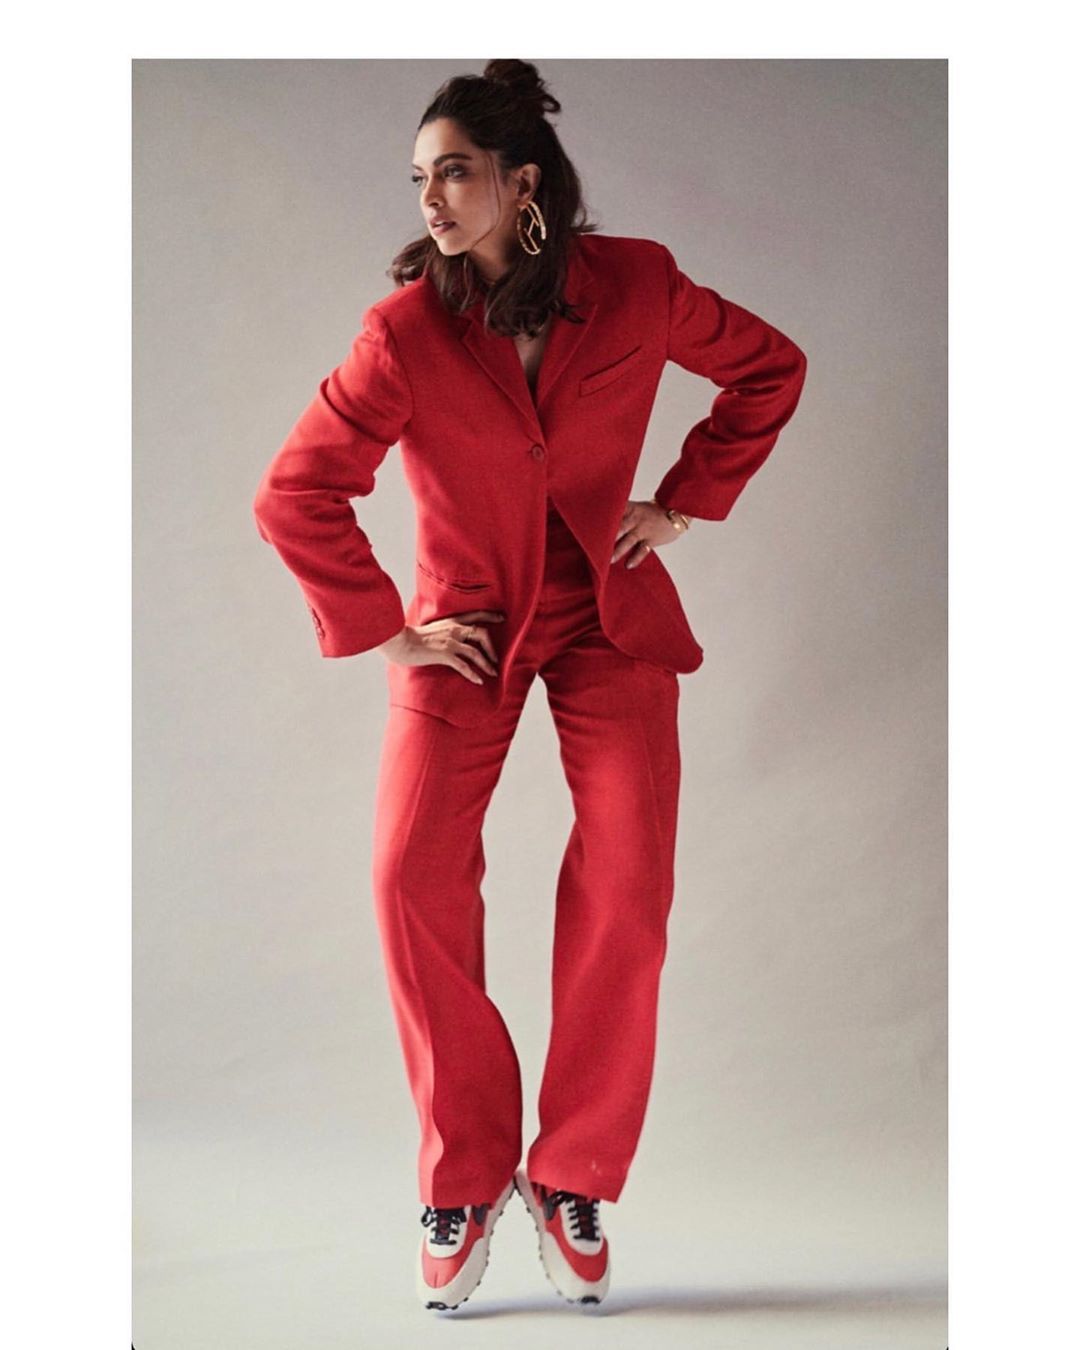 Sara Ali Khan Or Deepika Padukone: Who Styled The Red Pantsuit The Best? 1